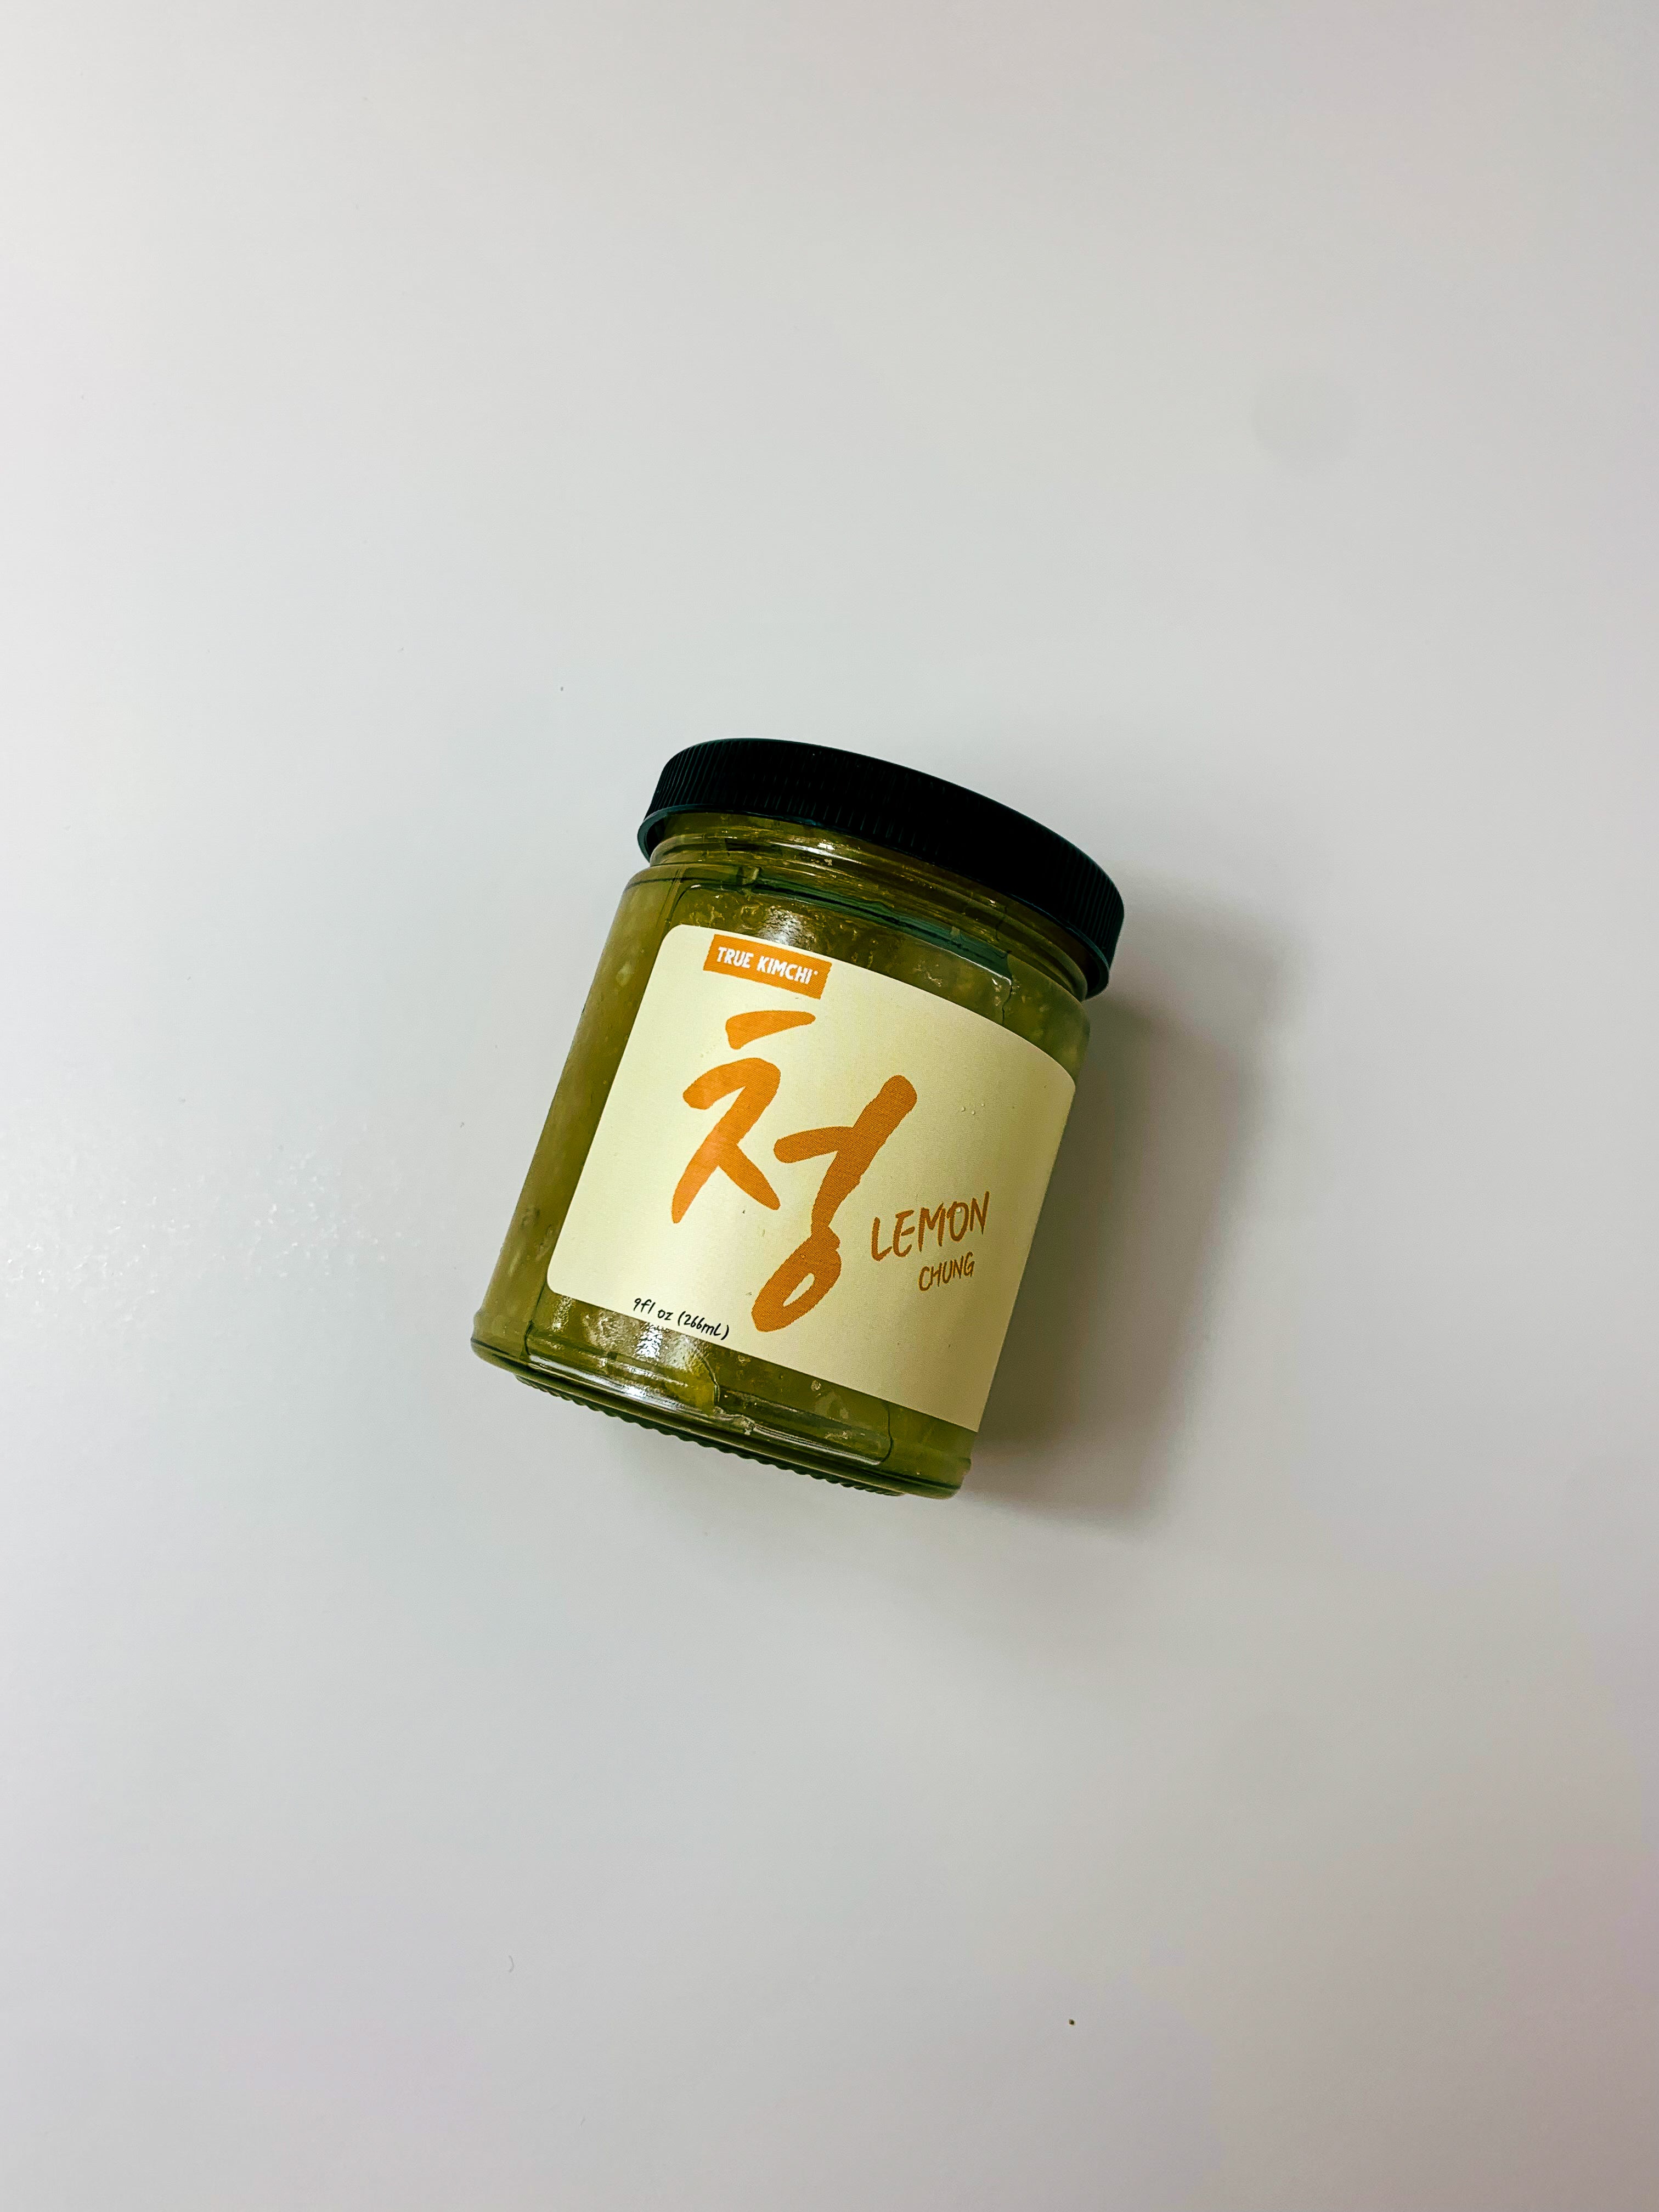 Lemon Chung (Lemon Preserve)